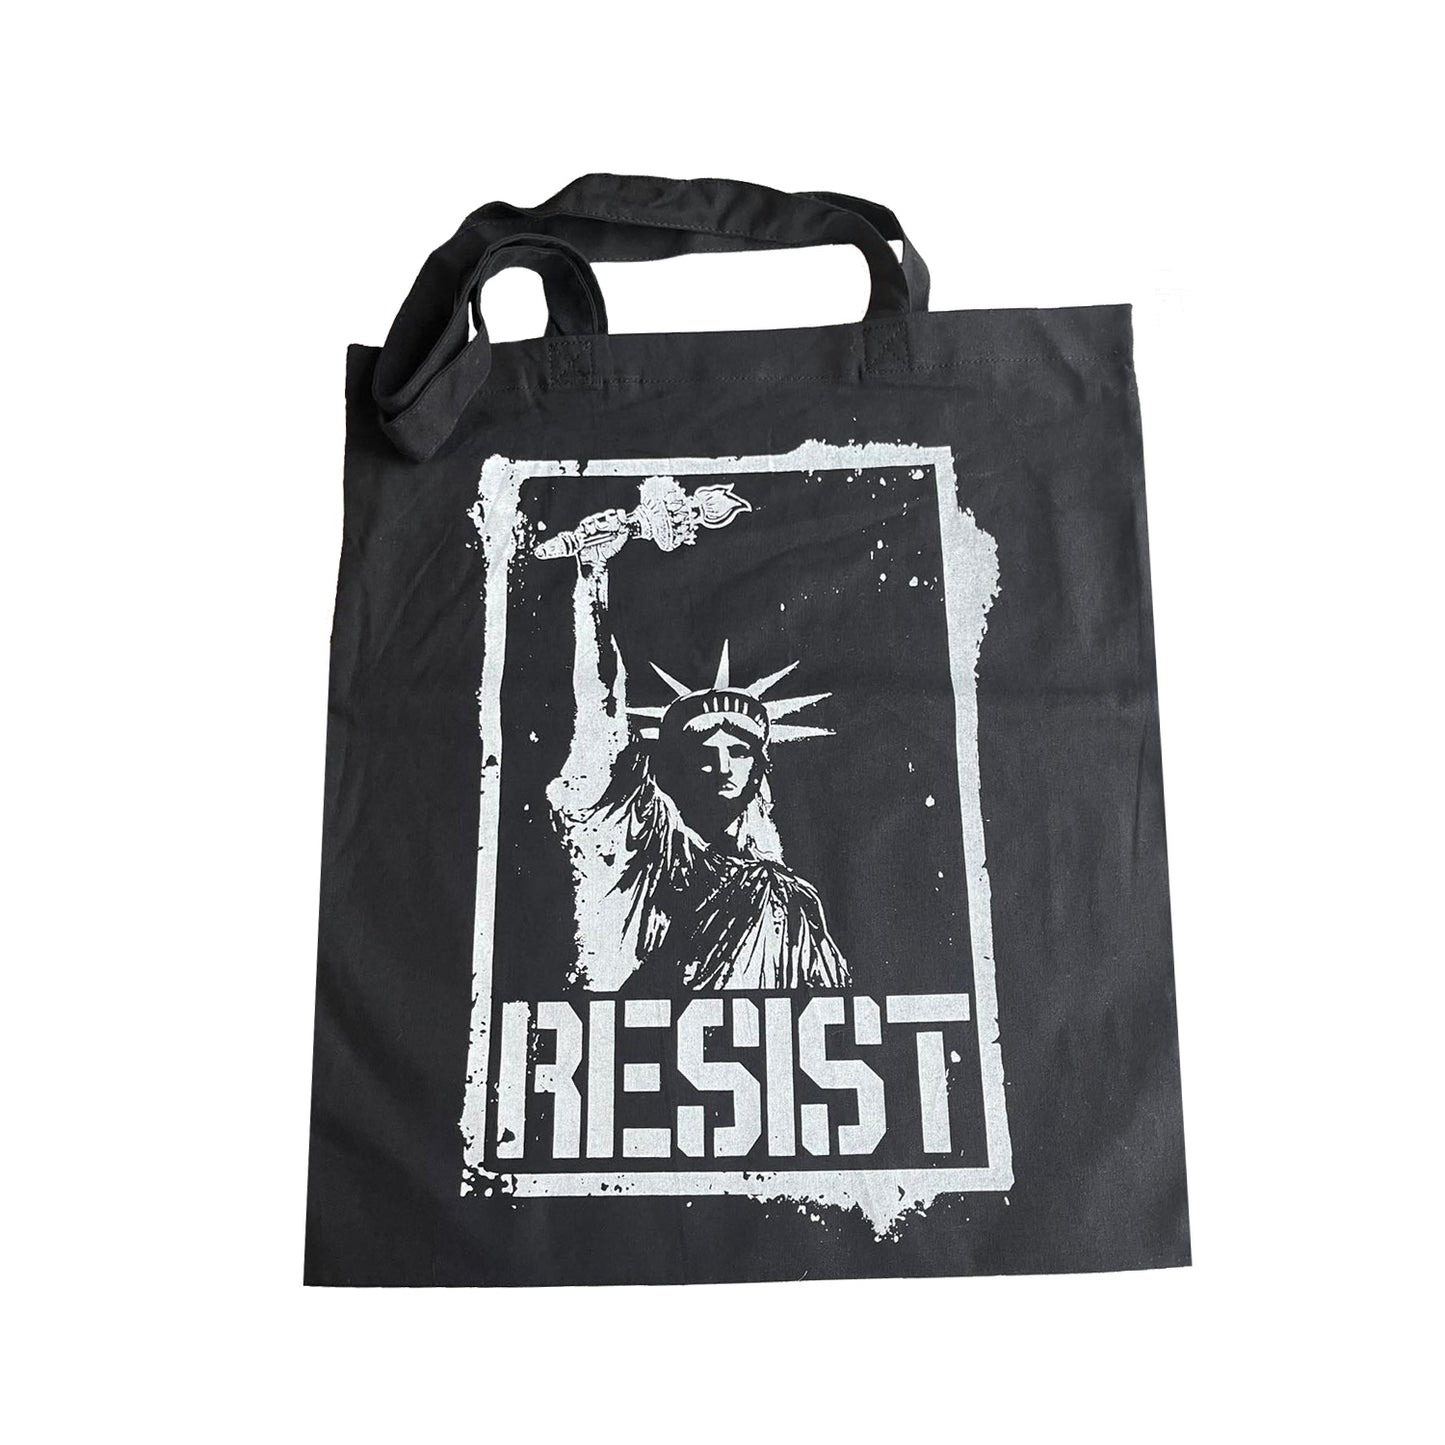 Resist Statue Of Liberty Anti-establishment tote bag, Punk tote, Protest bag